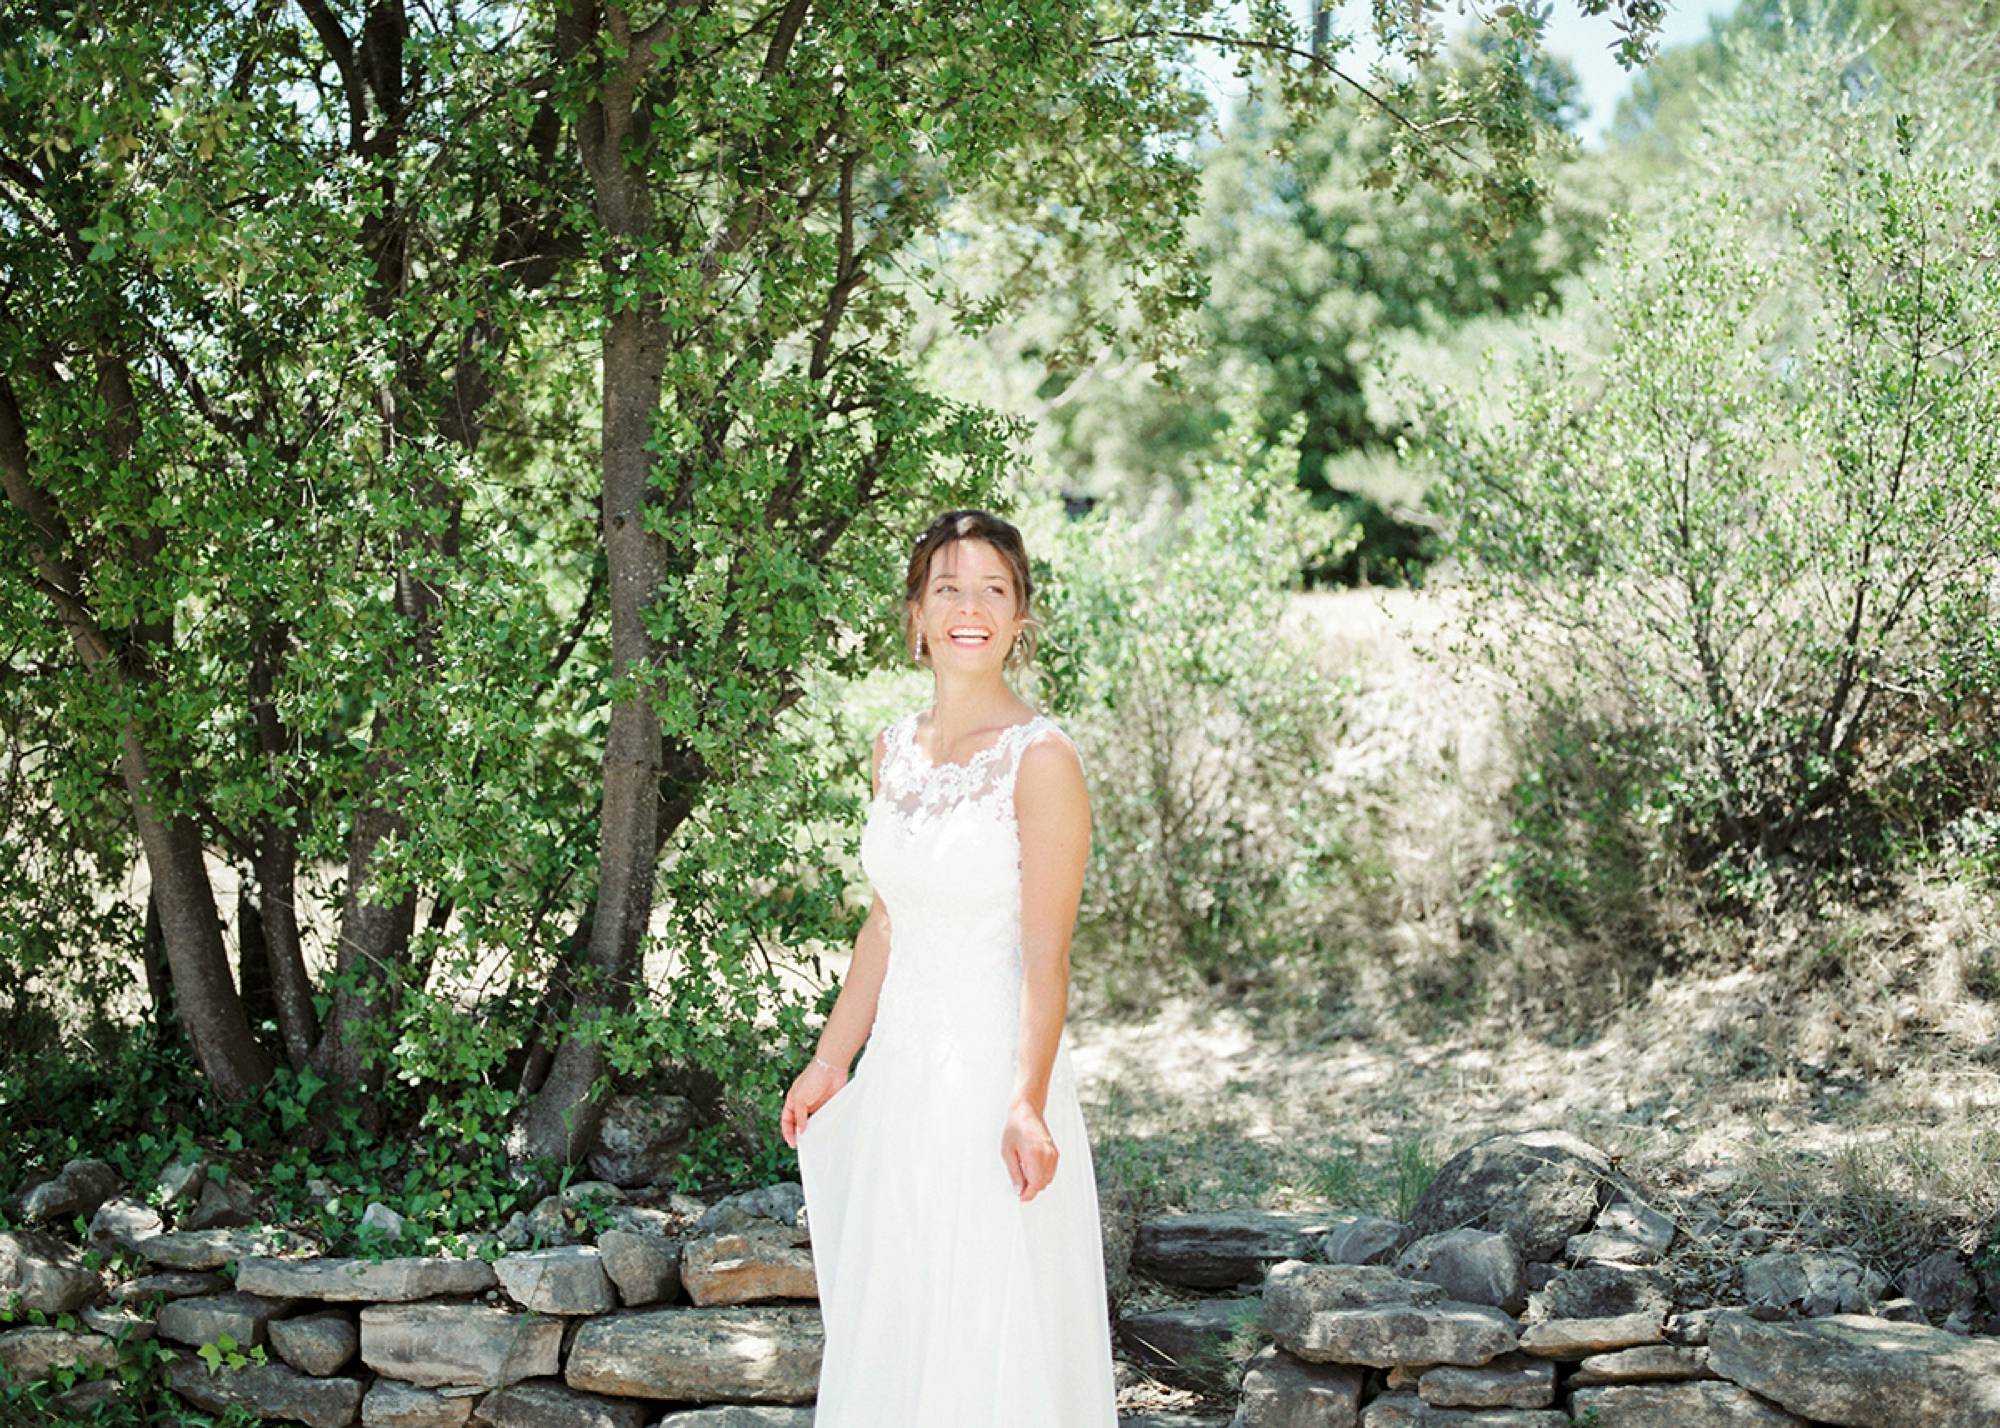 Wedding photographer Provence - Bridal portrait